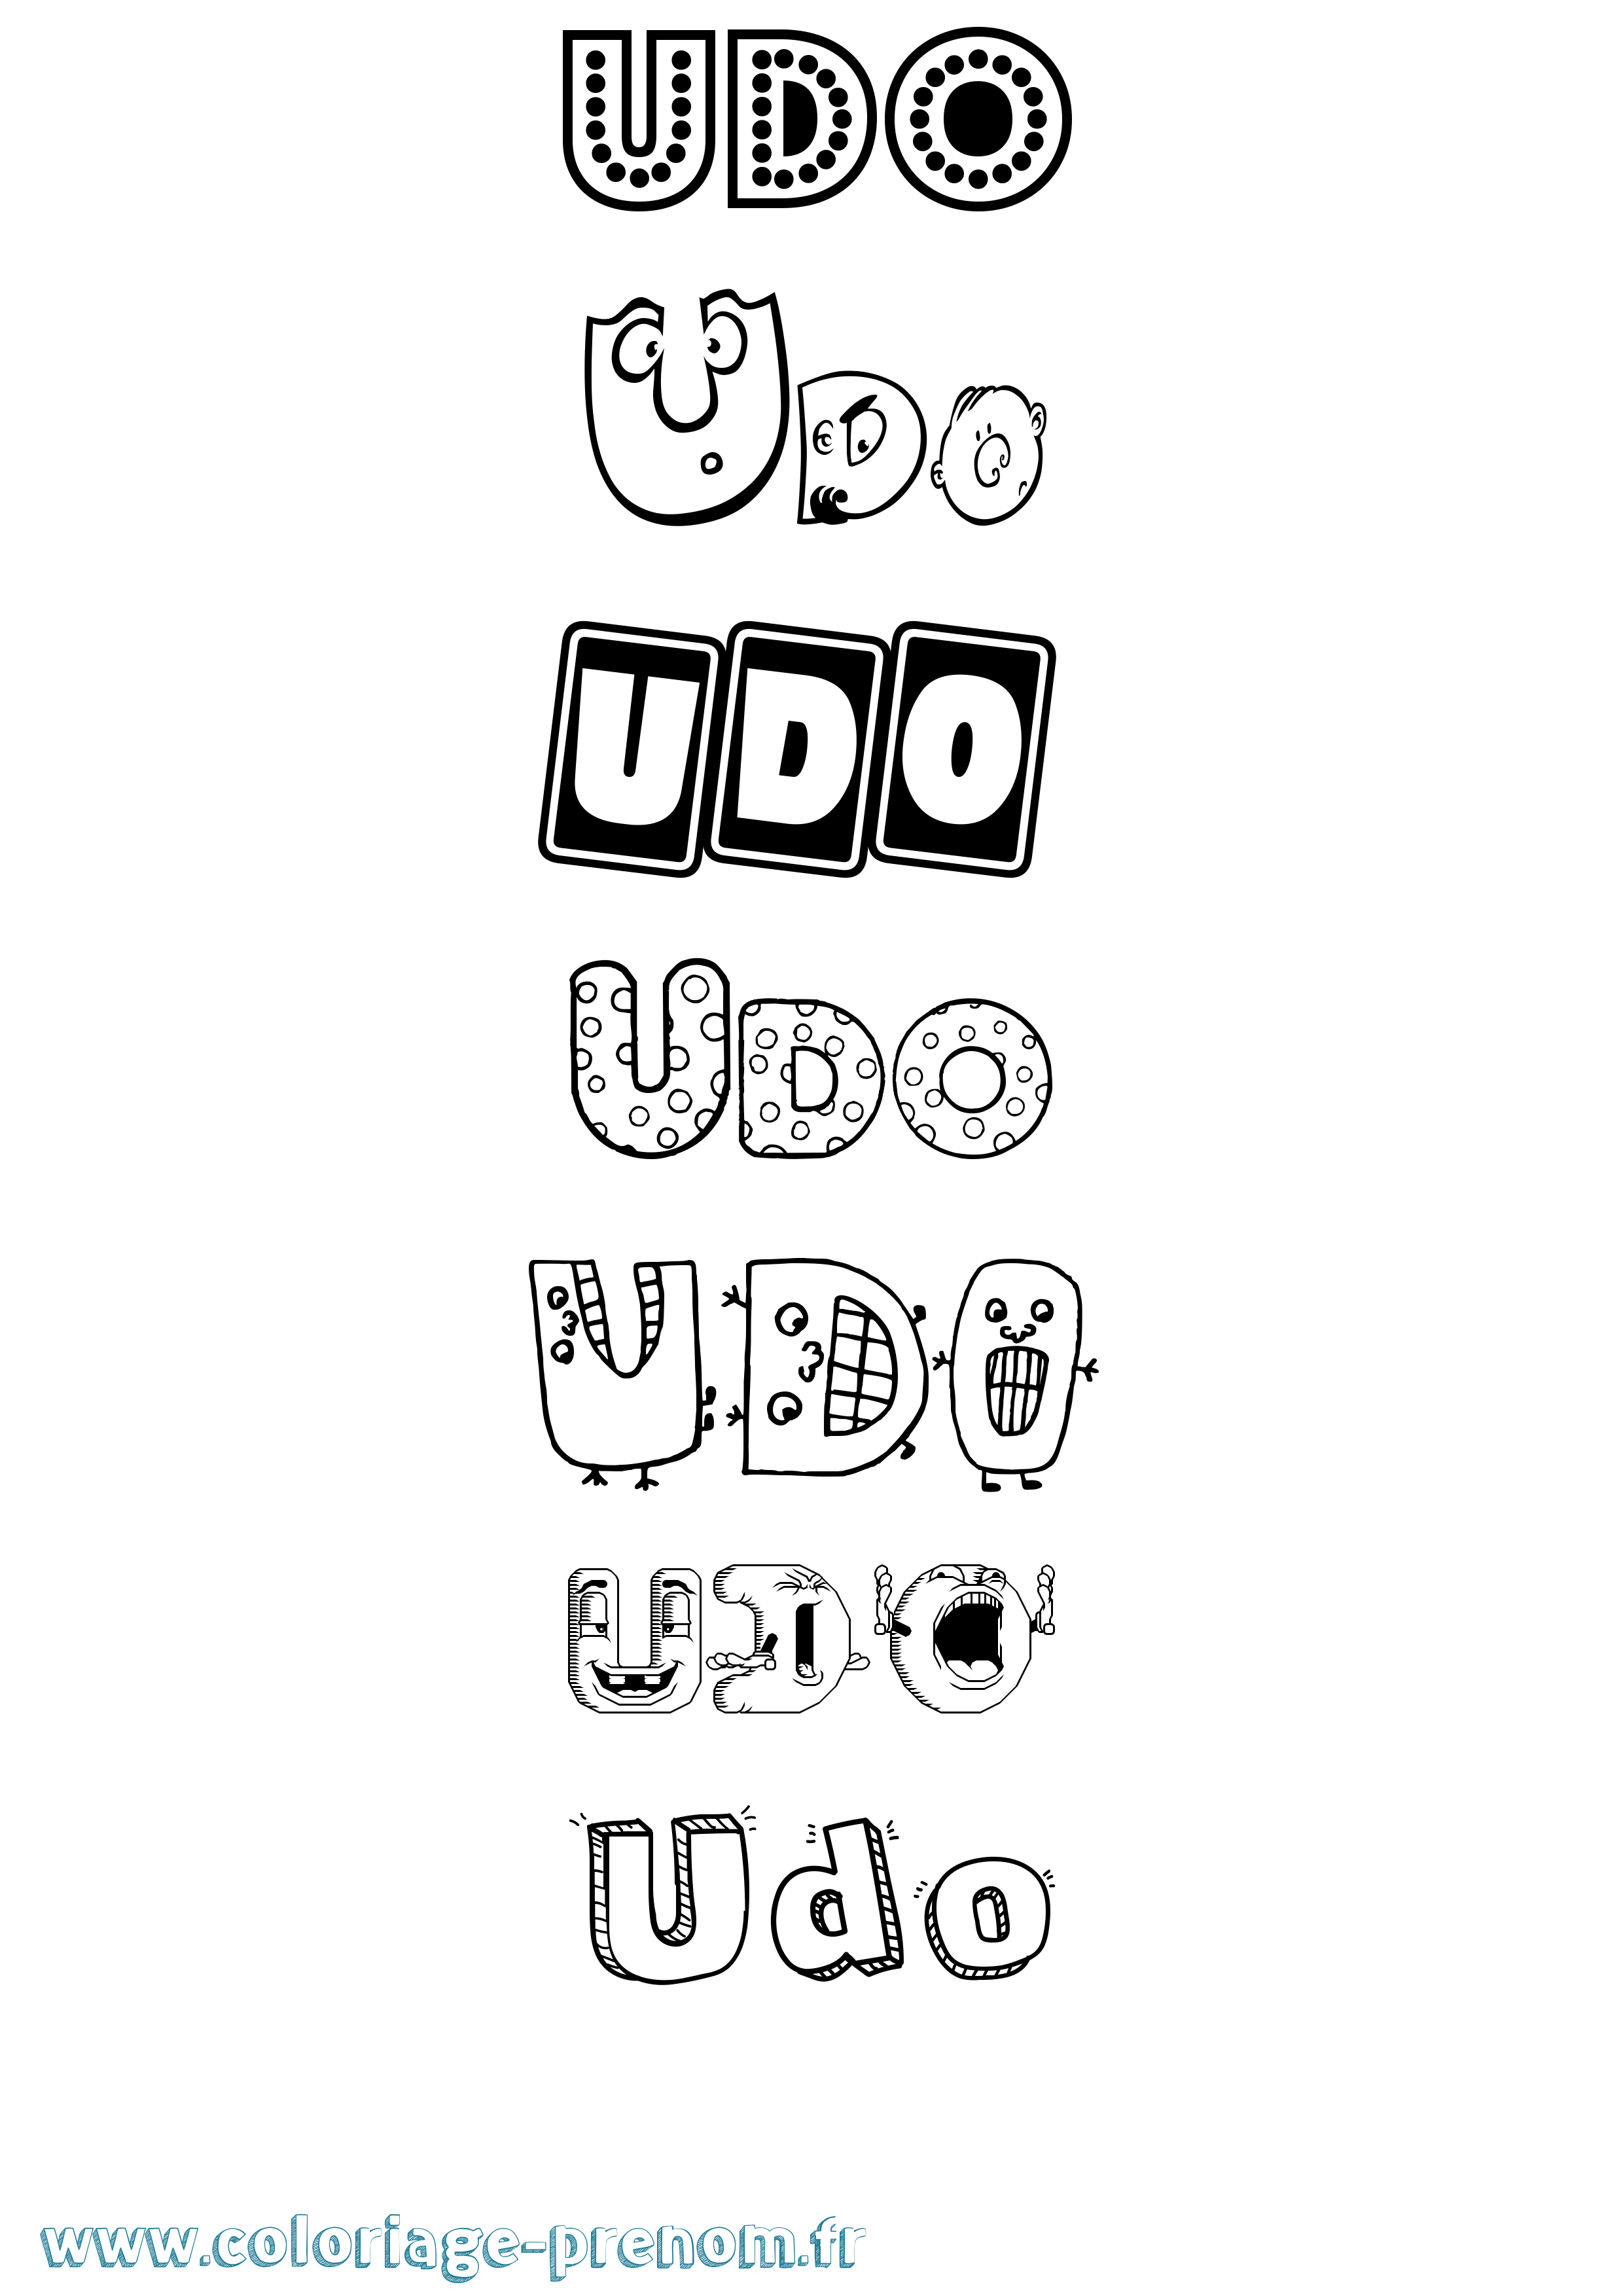 Coloriage prénom Udo Fun